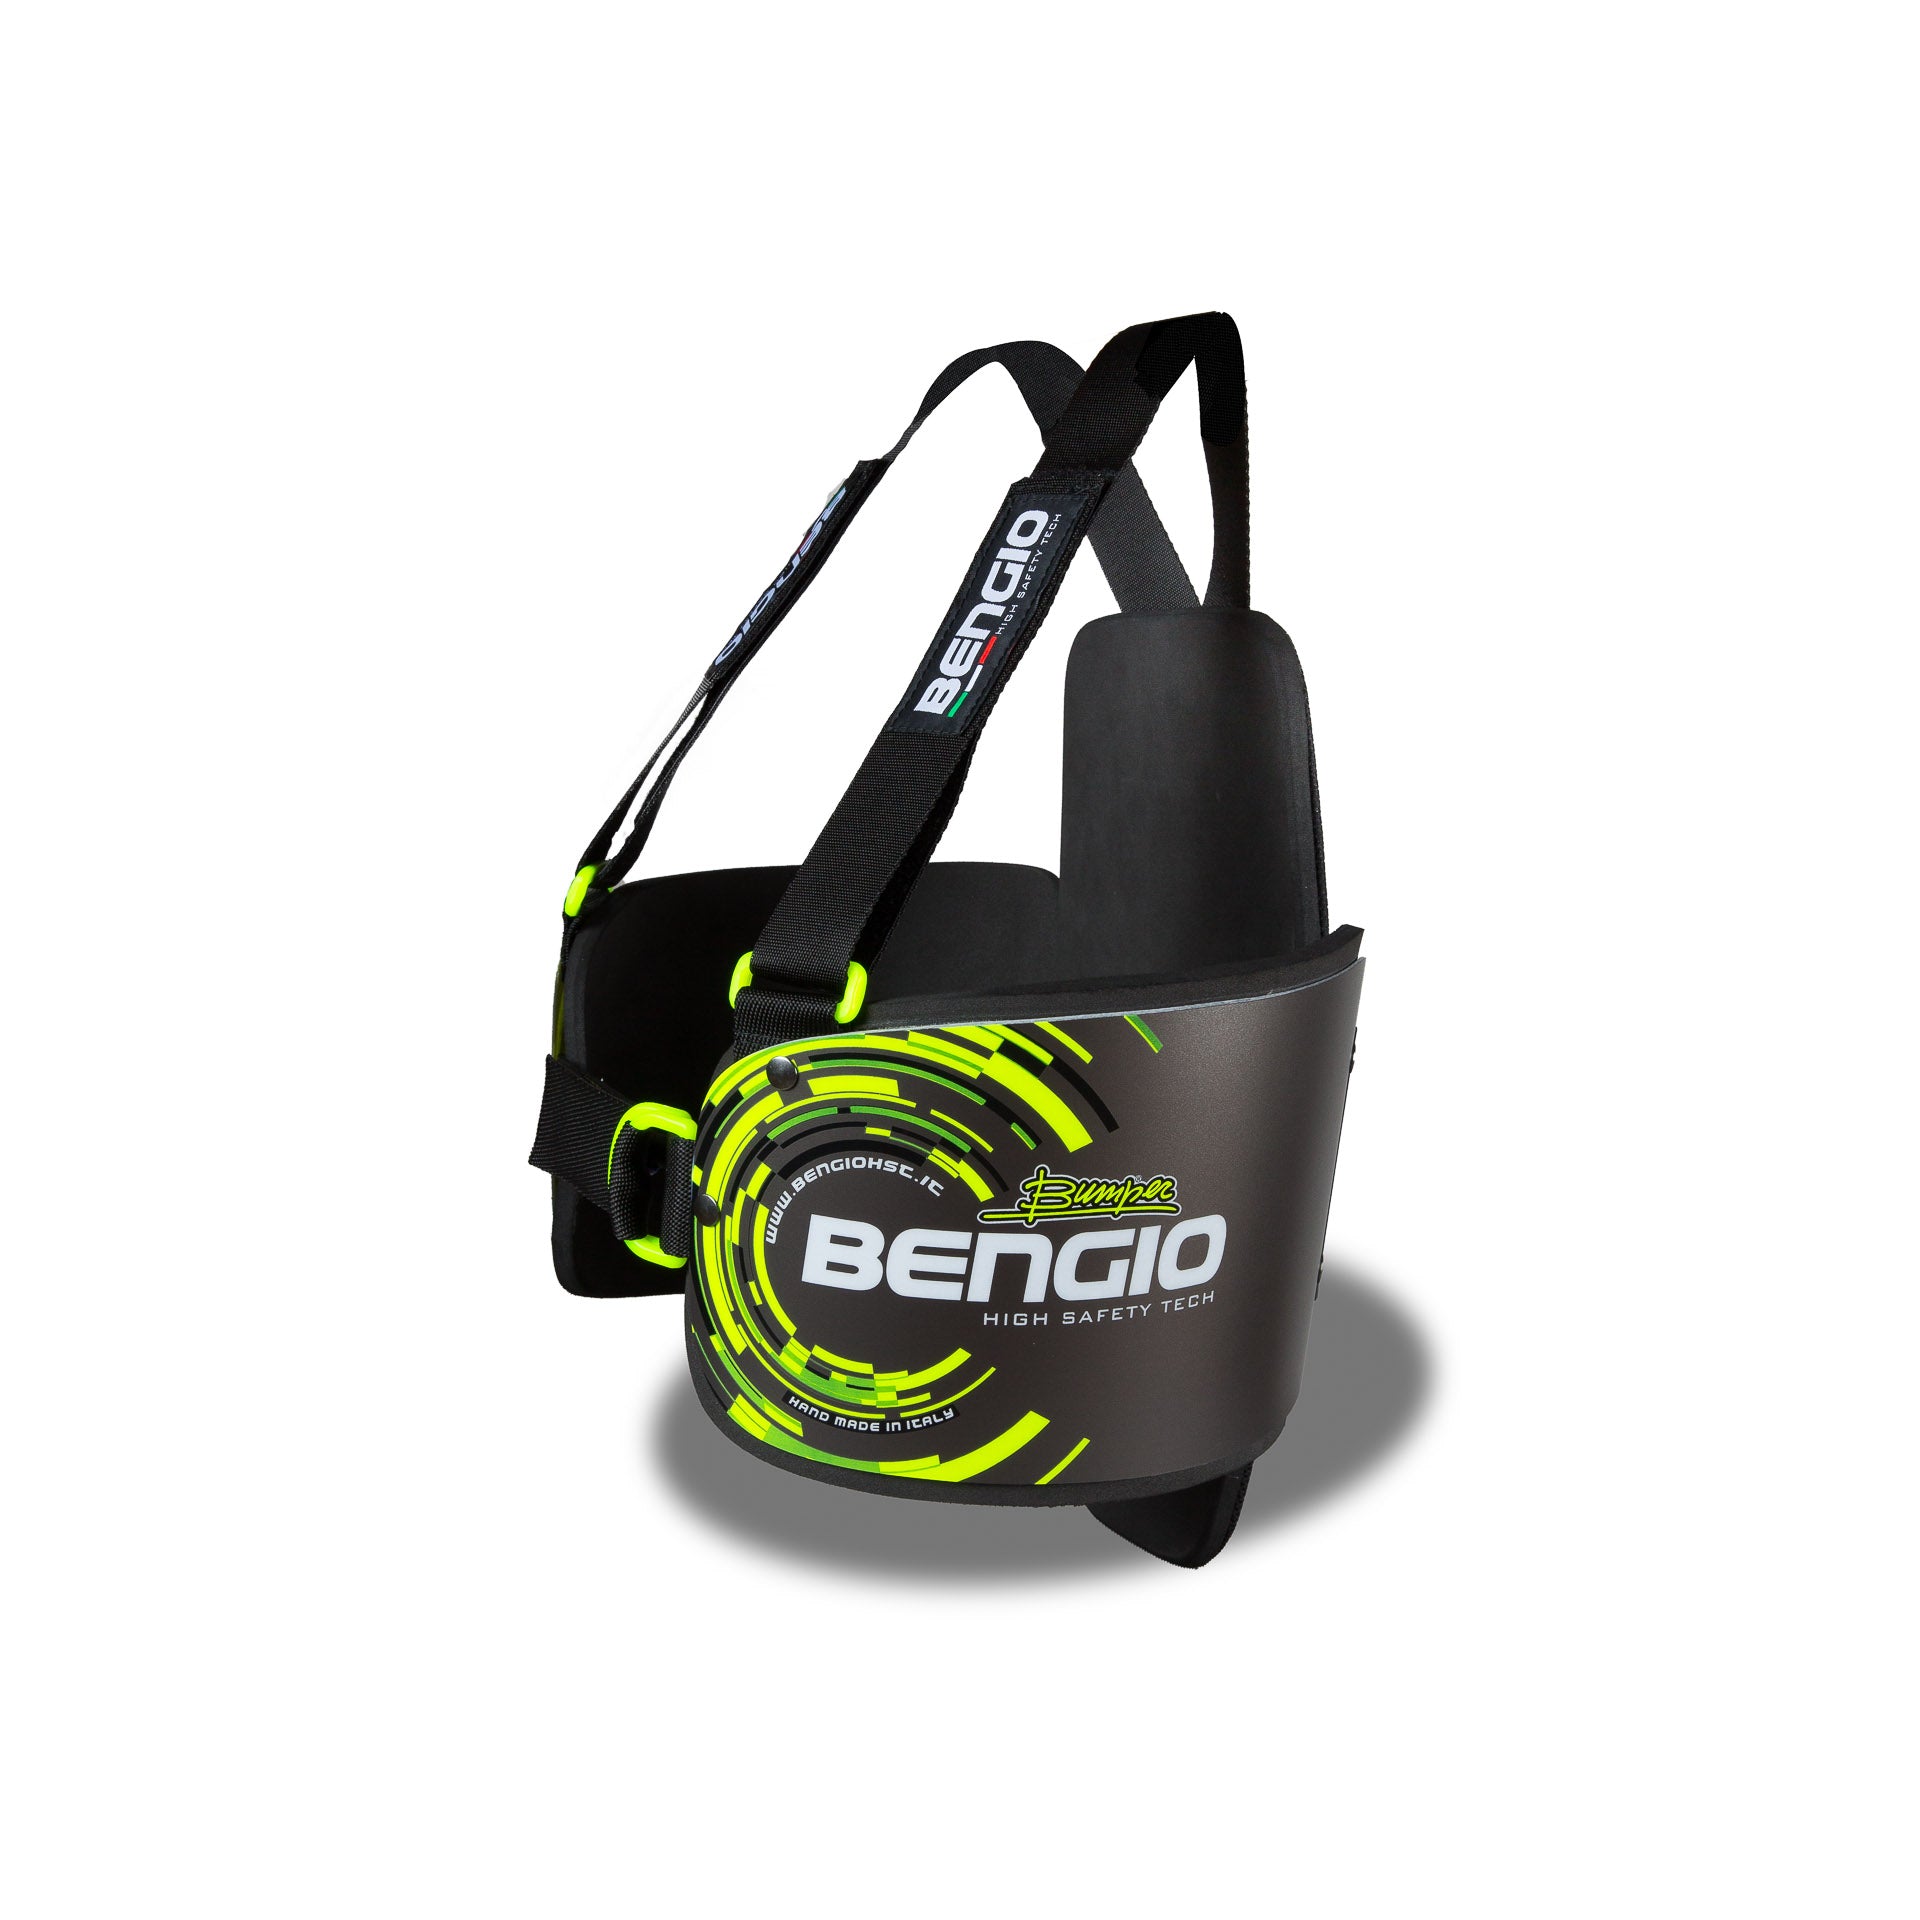 BENGIO STDPLSMGY BUMPER Plus Захист ребер для картингу, сірий/флюор. жовтий, розмір S/M Photo-1 